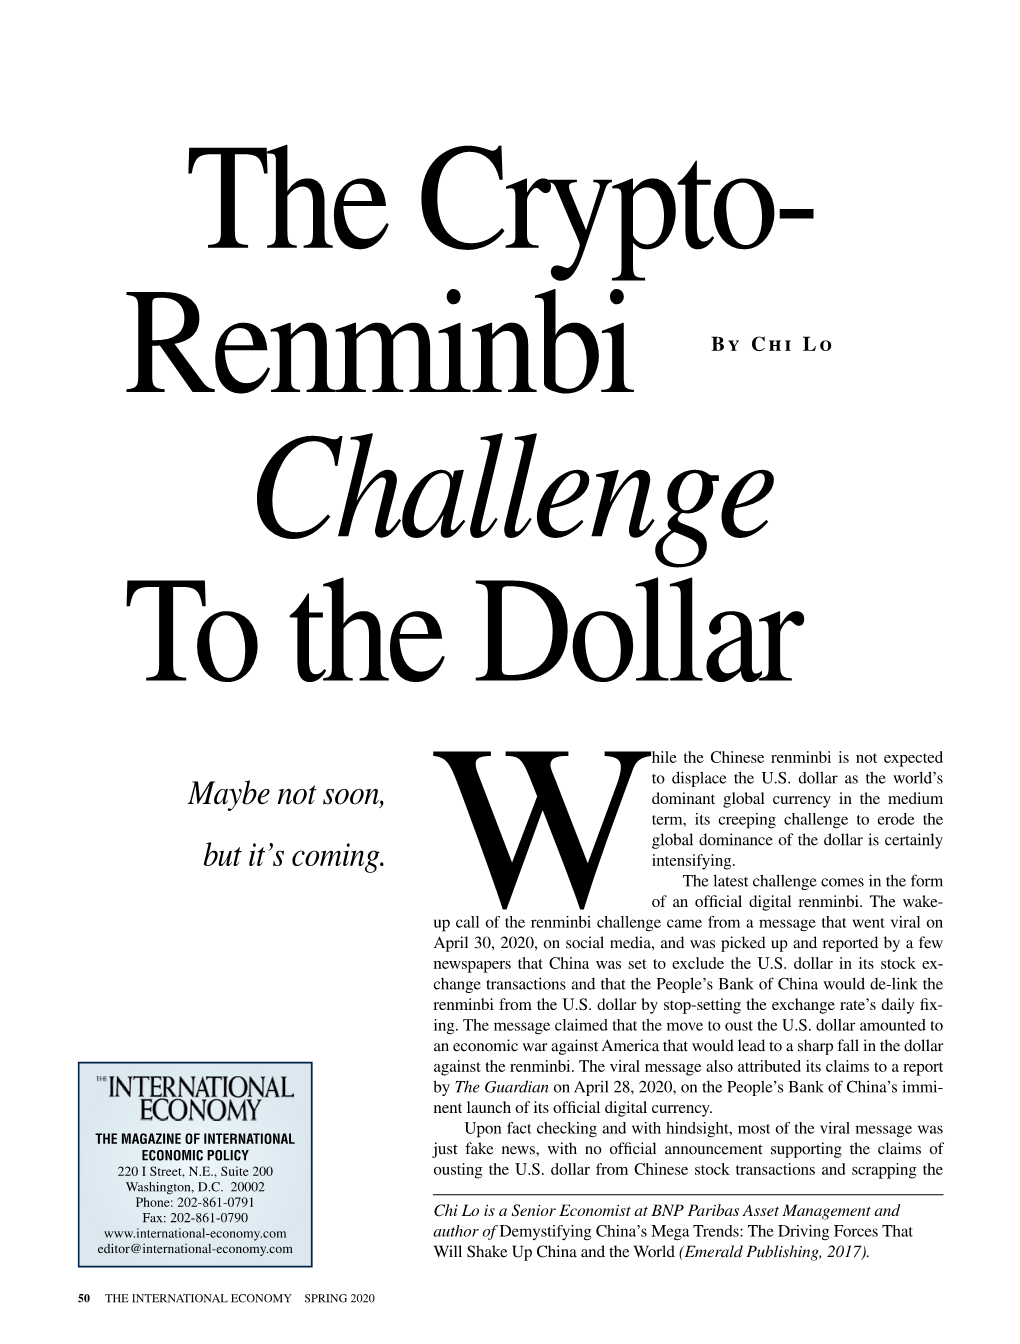 The Crypto-Renminbi Challenge to the Dollar